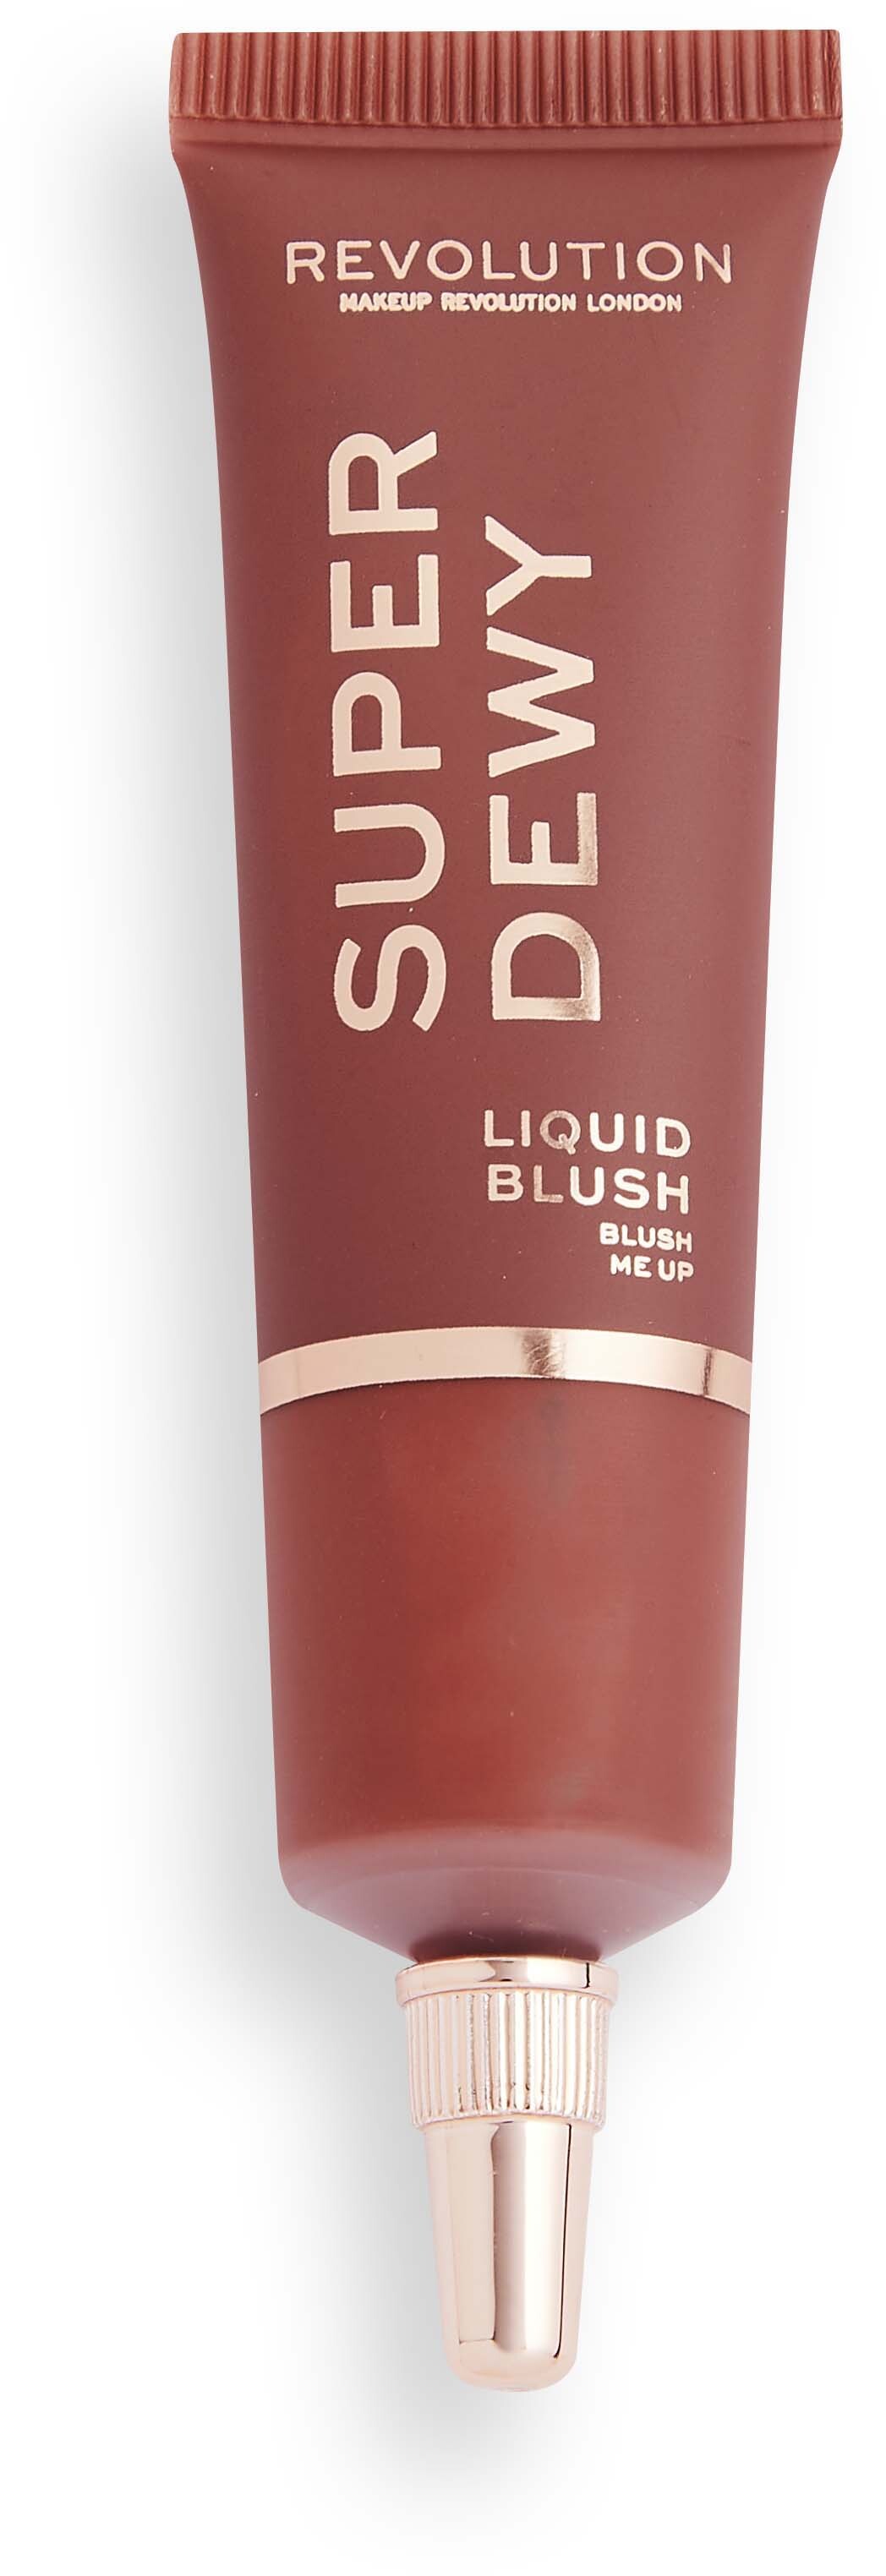 Makeup Revolution Superdewy Liquid Blusher - Blush Me Up